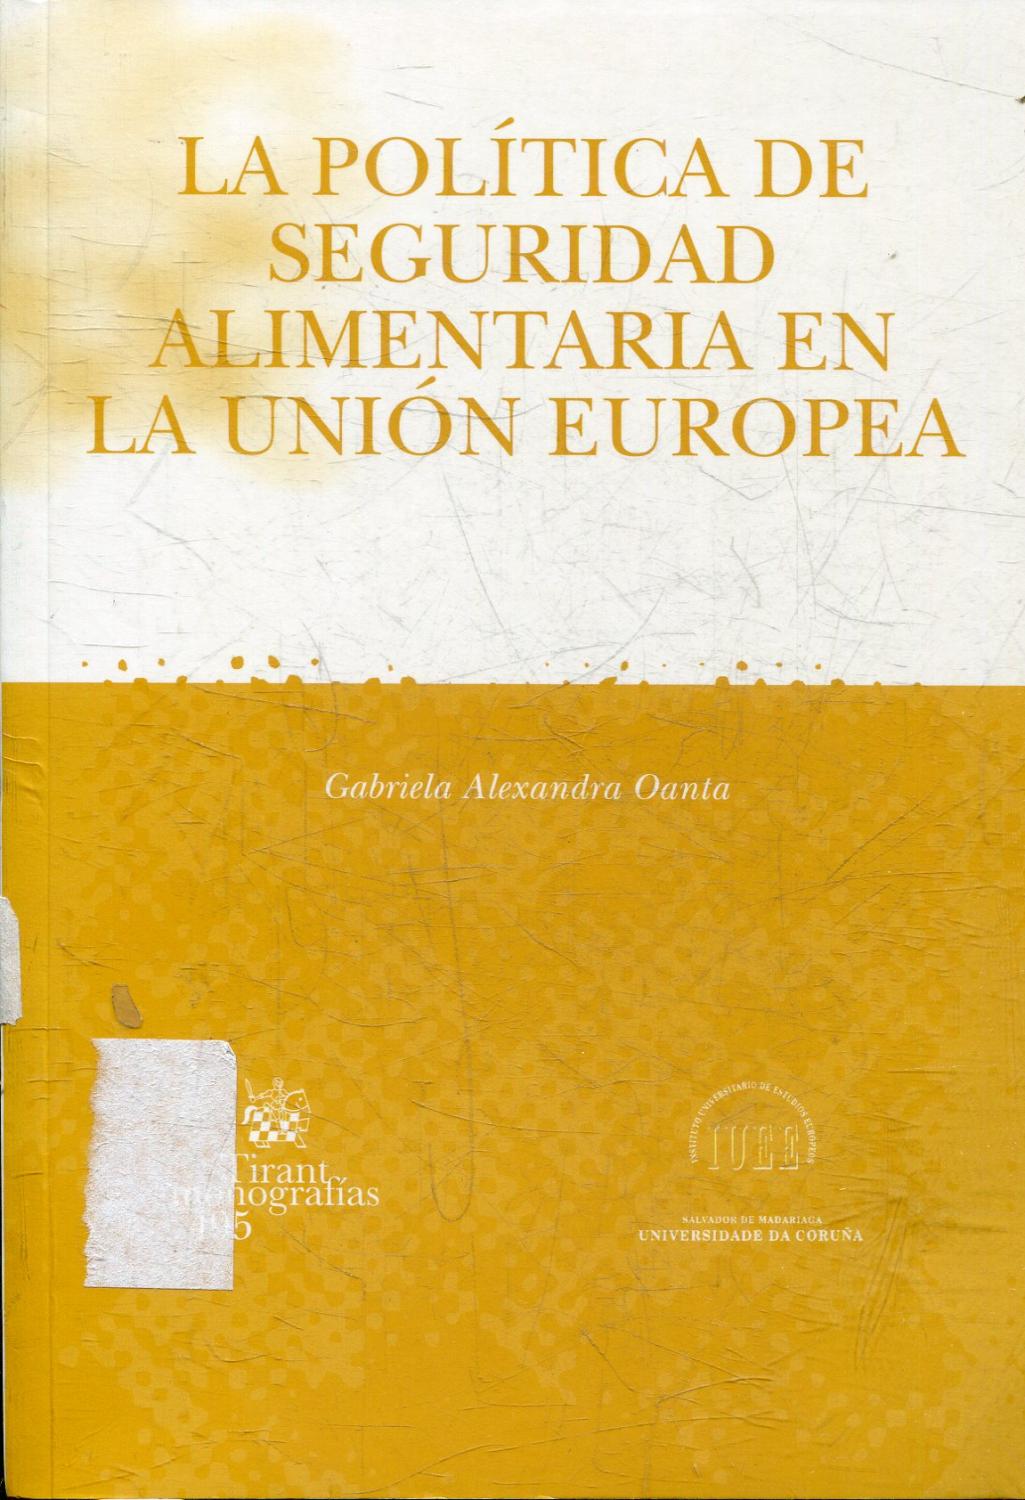 LA POLITICA DE SEGURIDAD ALIMENTARIA EN LA UNION EUROPEA. - OANTA, Gabriela Alexandra.